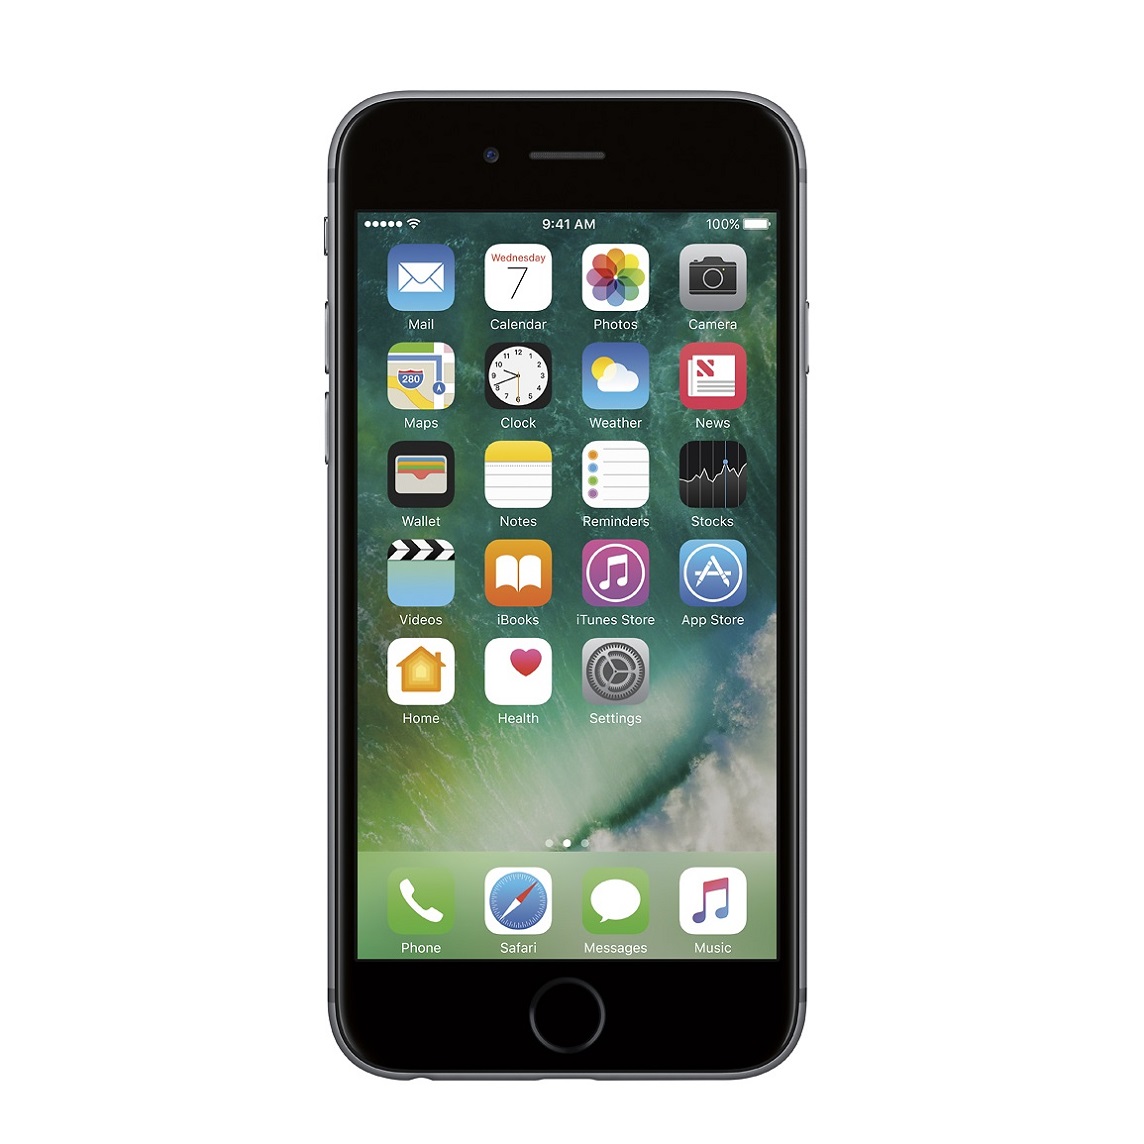 Apple iPhone 6s - 16GB - Space Gray (Unlocked) A1633 (CDMA + GSM)